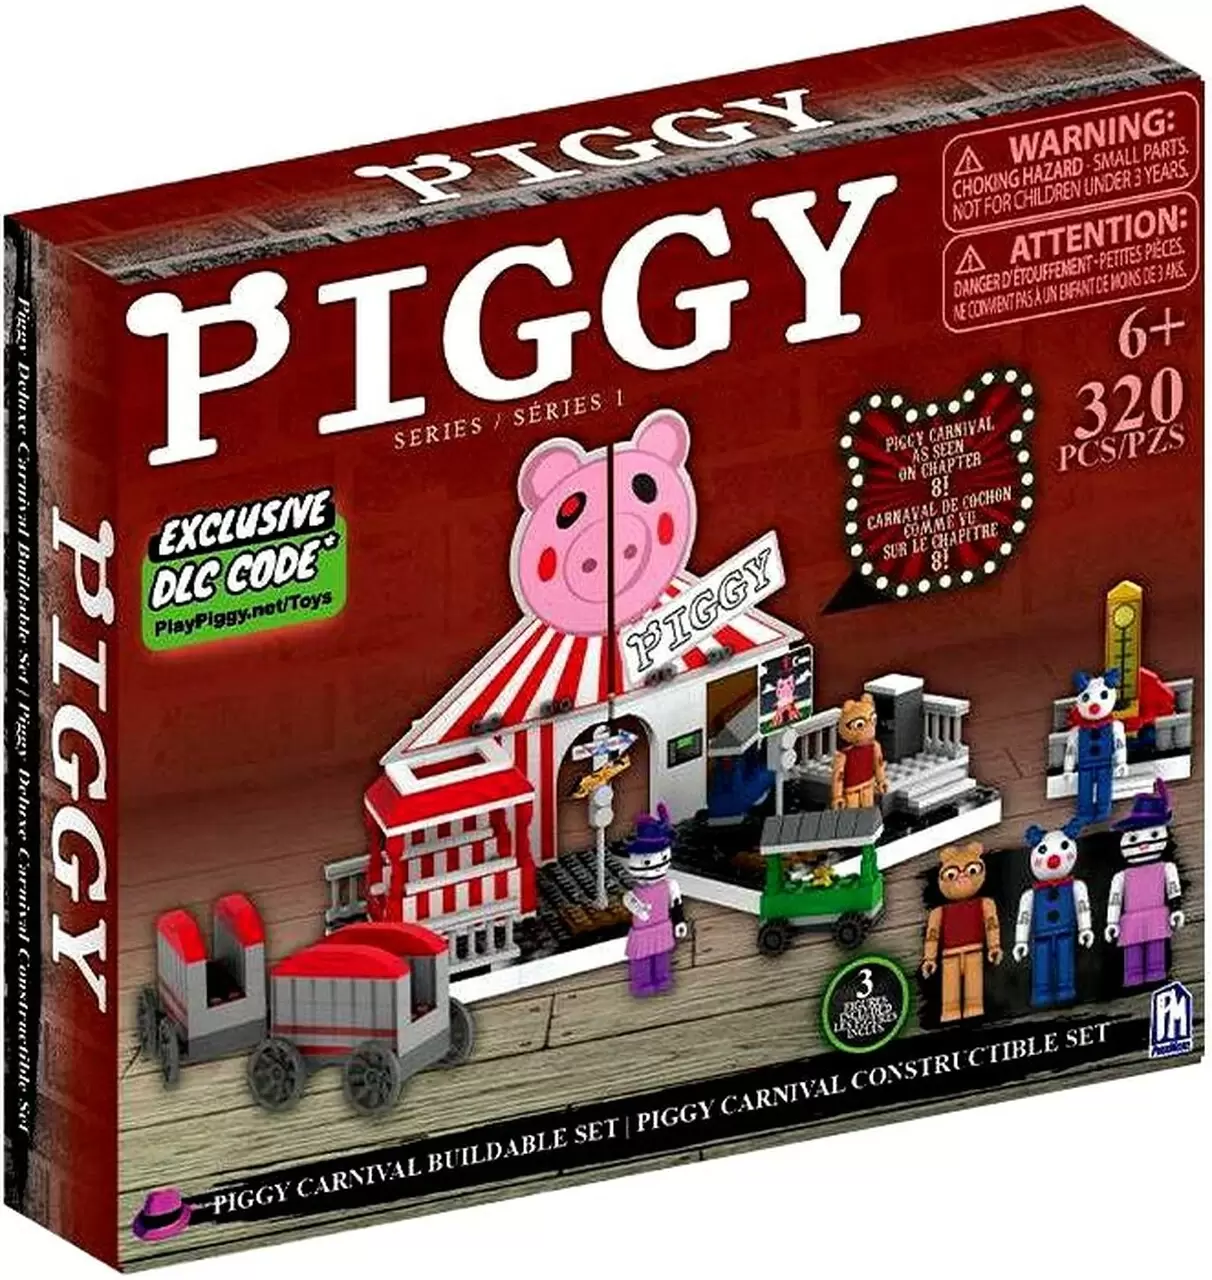 ALL Piggy Buildable Sets!  Roblox Piggy Construction 